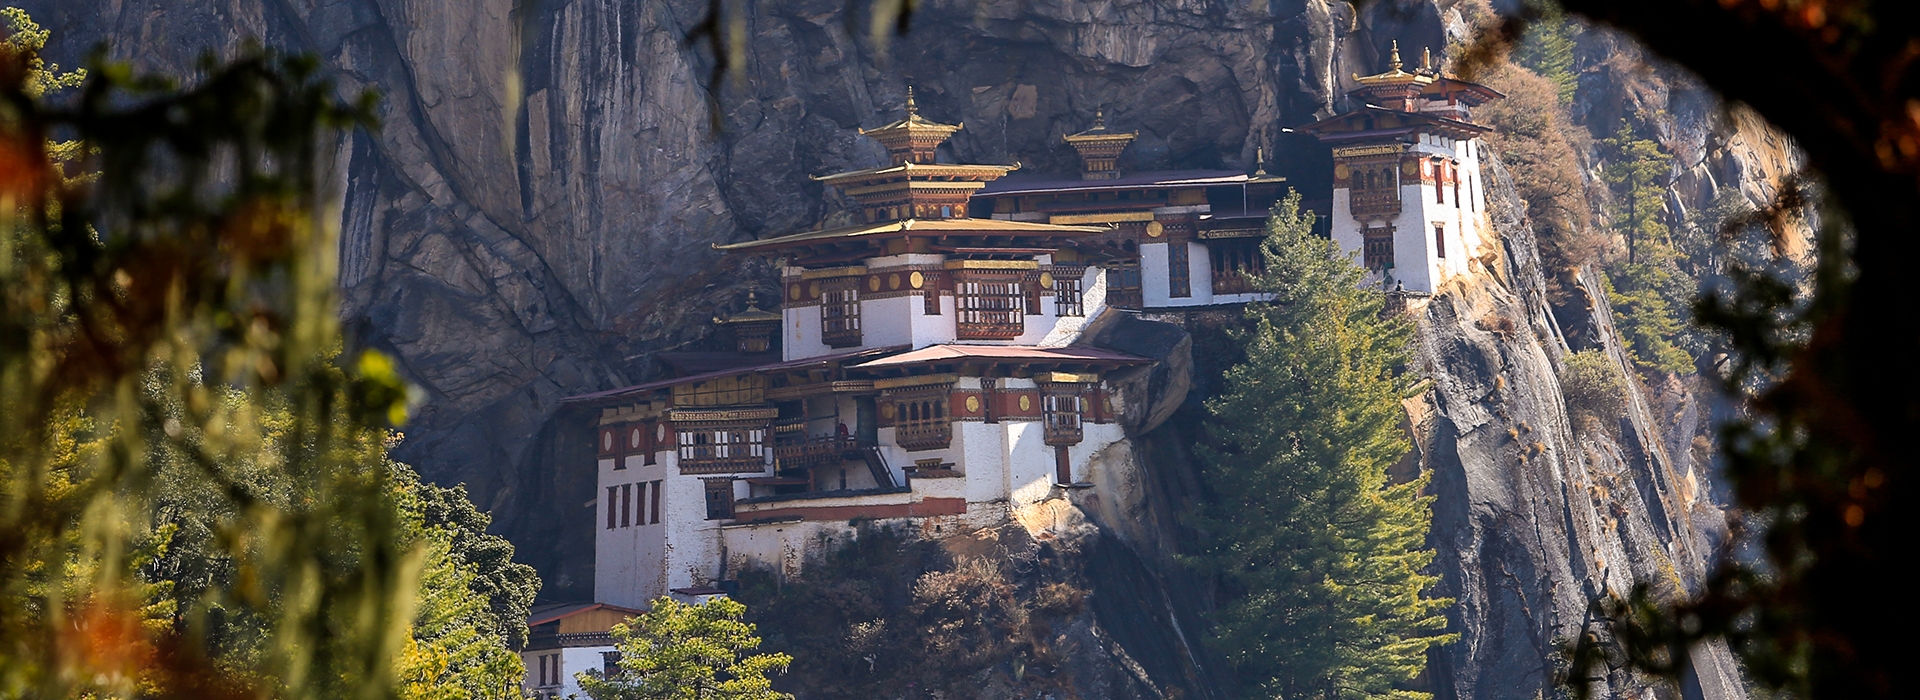 5N/6D Bhutan Odyssey Tour Package